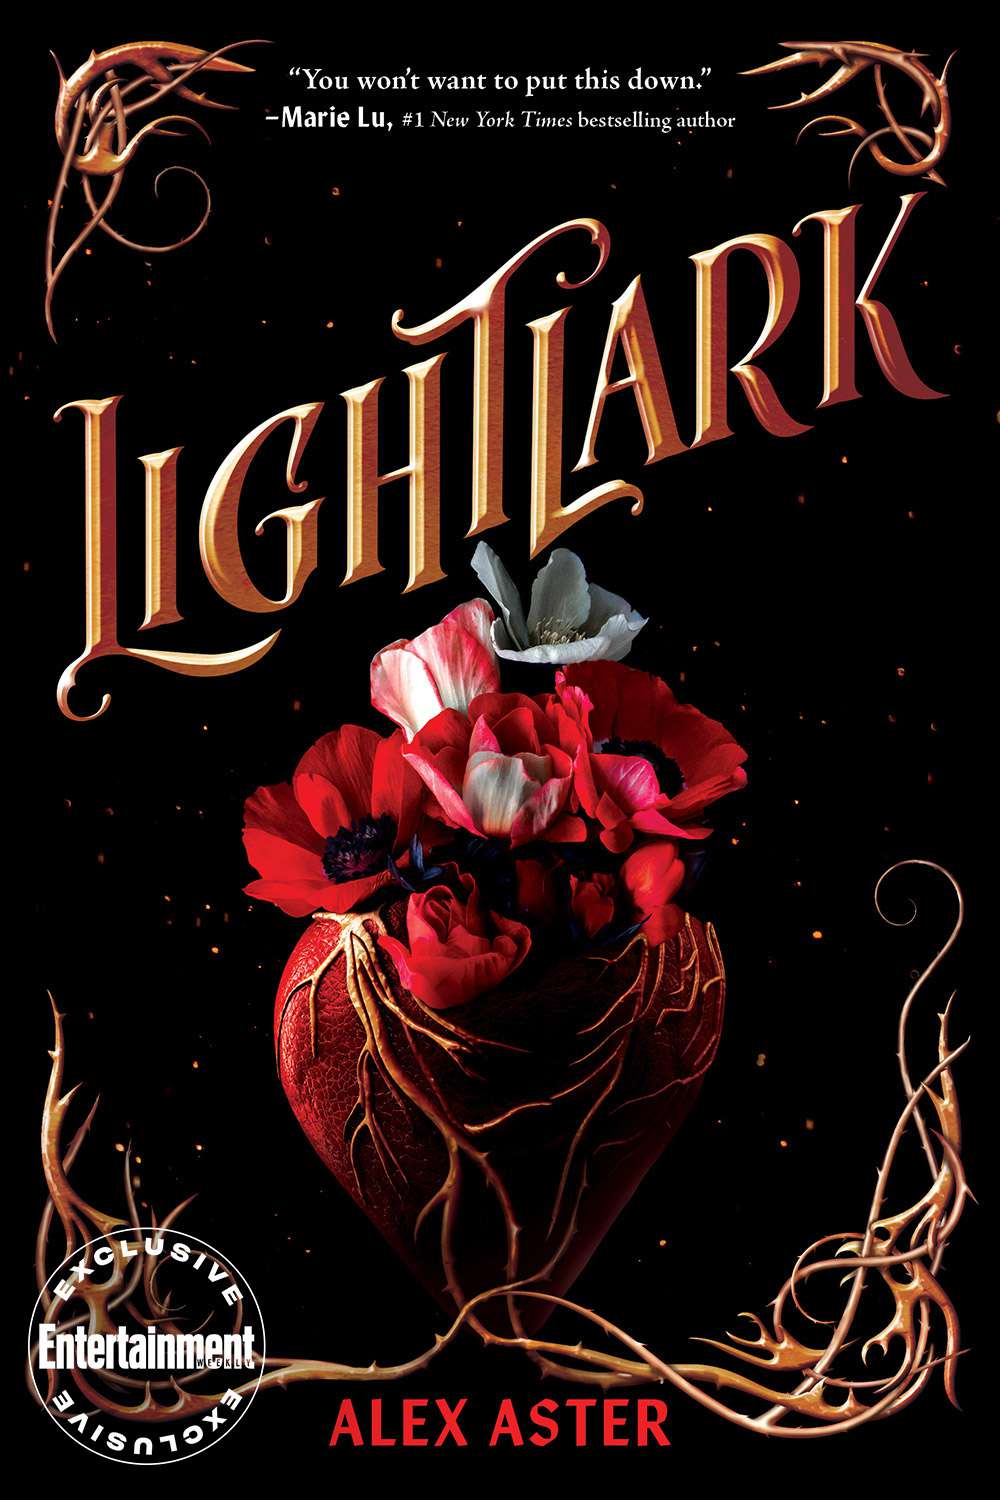 Alex Aster's Lightlark. Credit: Amulet Books